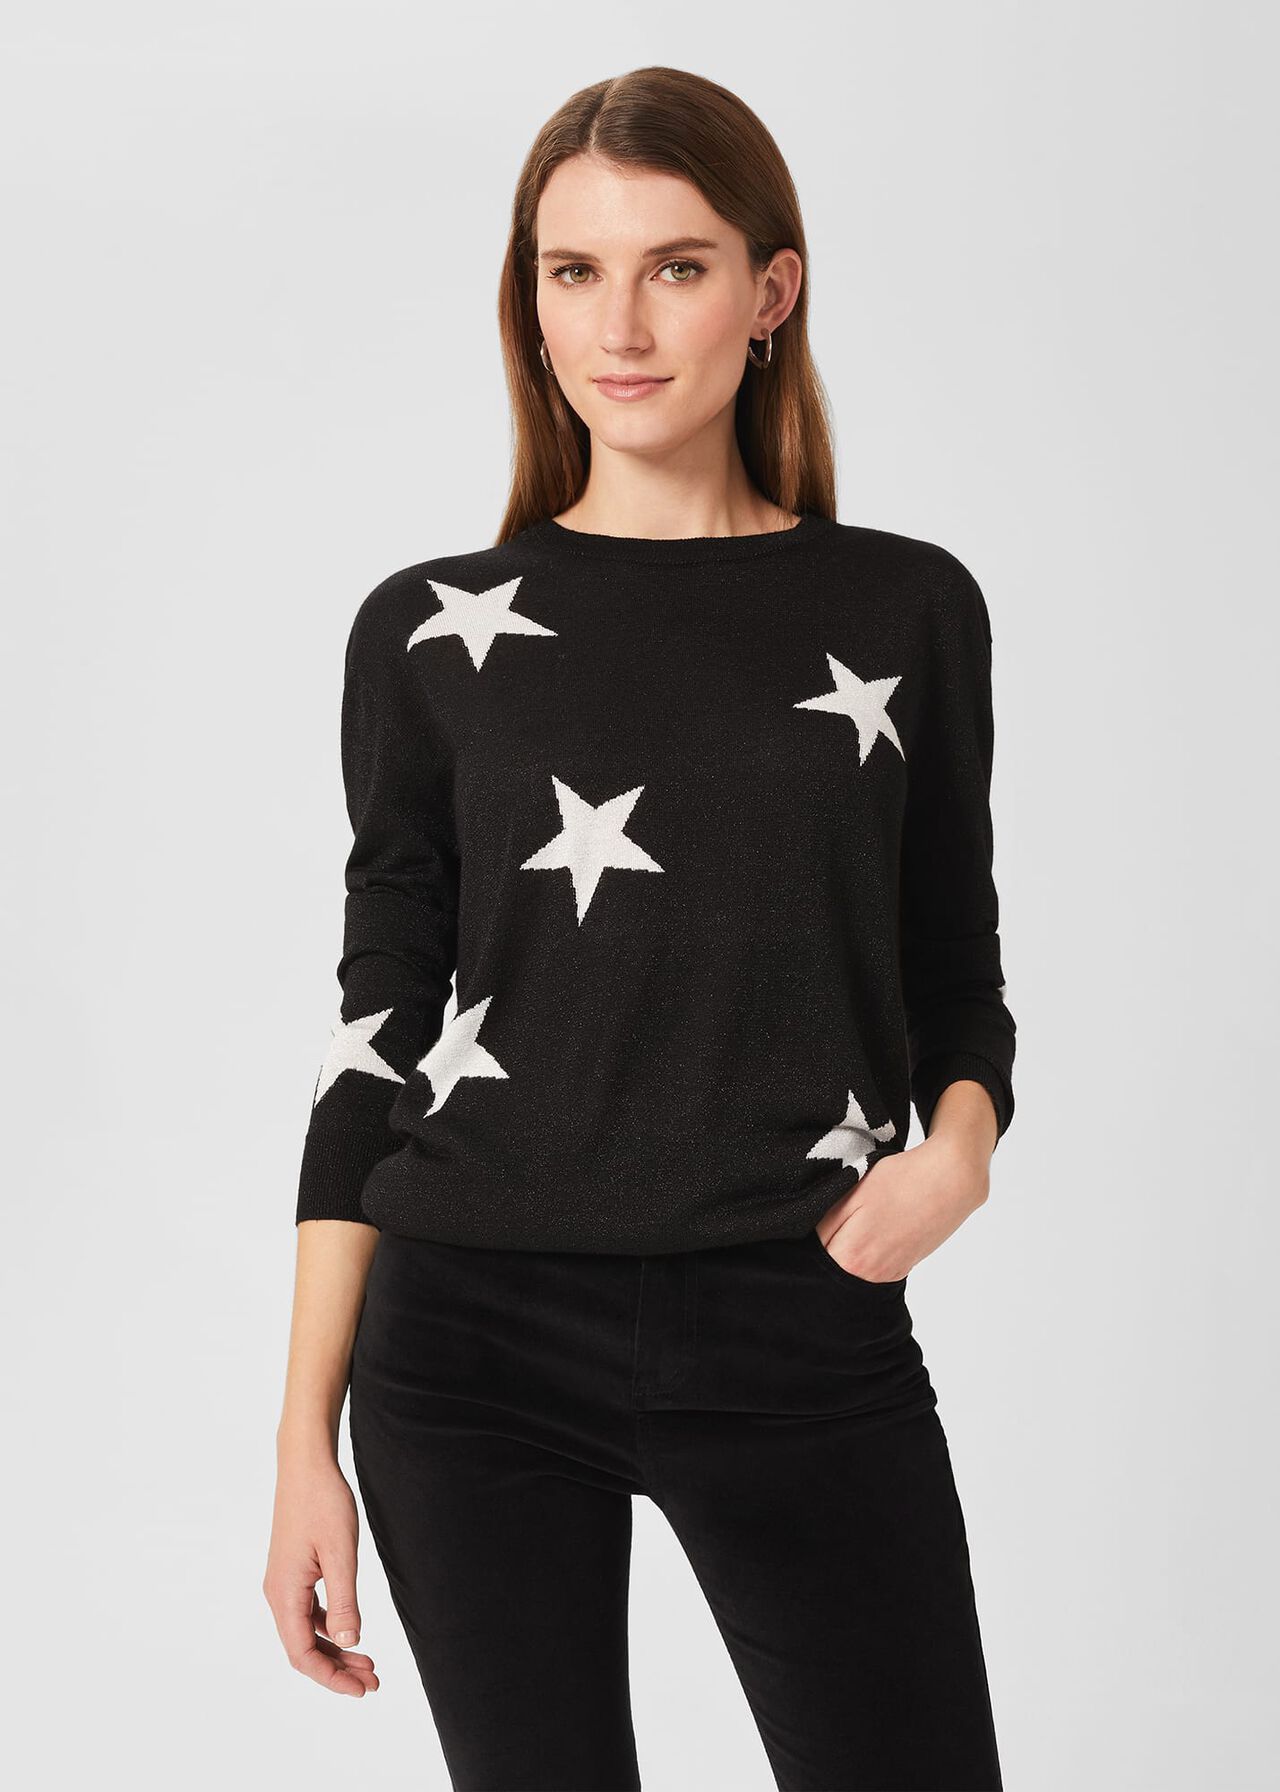 Deborah Sparkle Star Sweater, Black Silver, hi-res